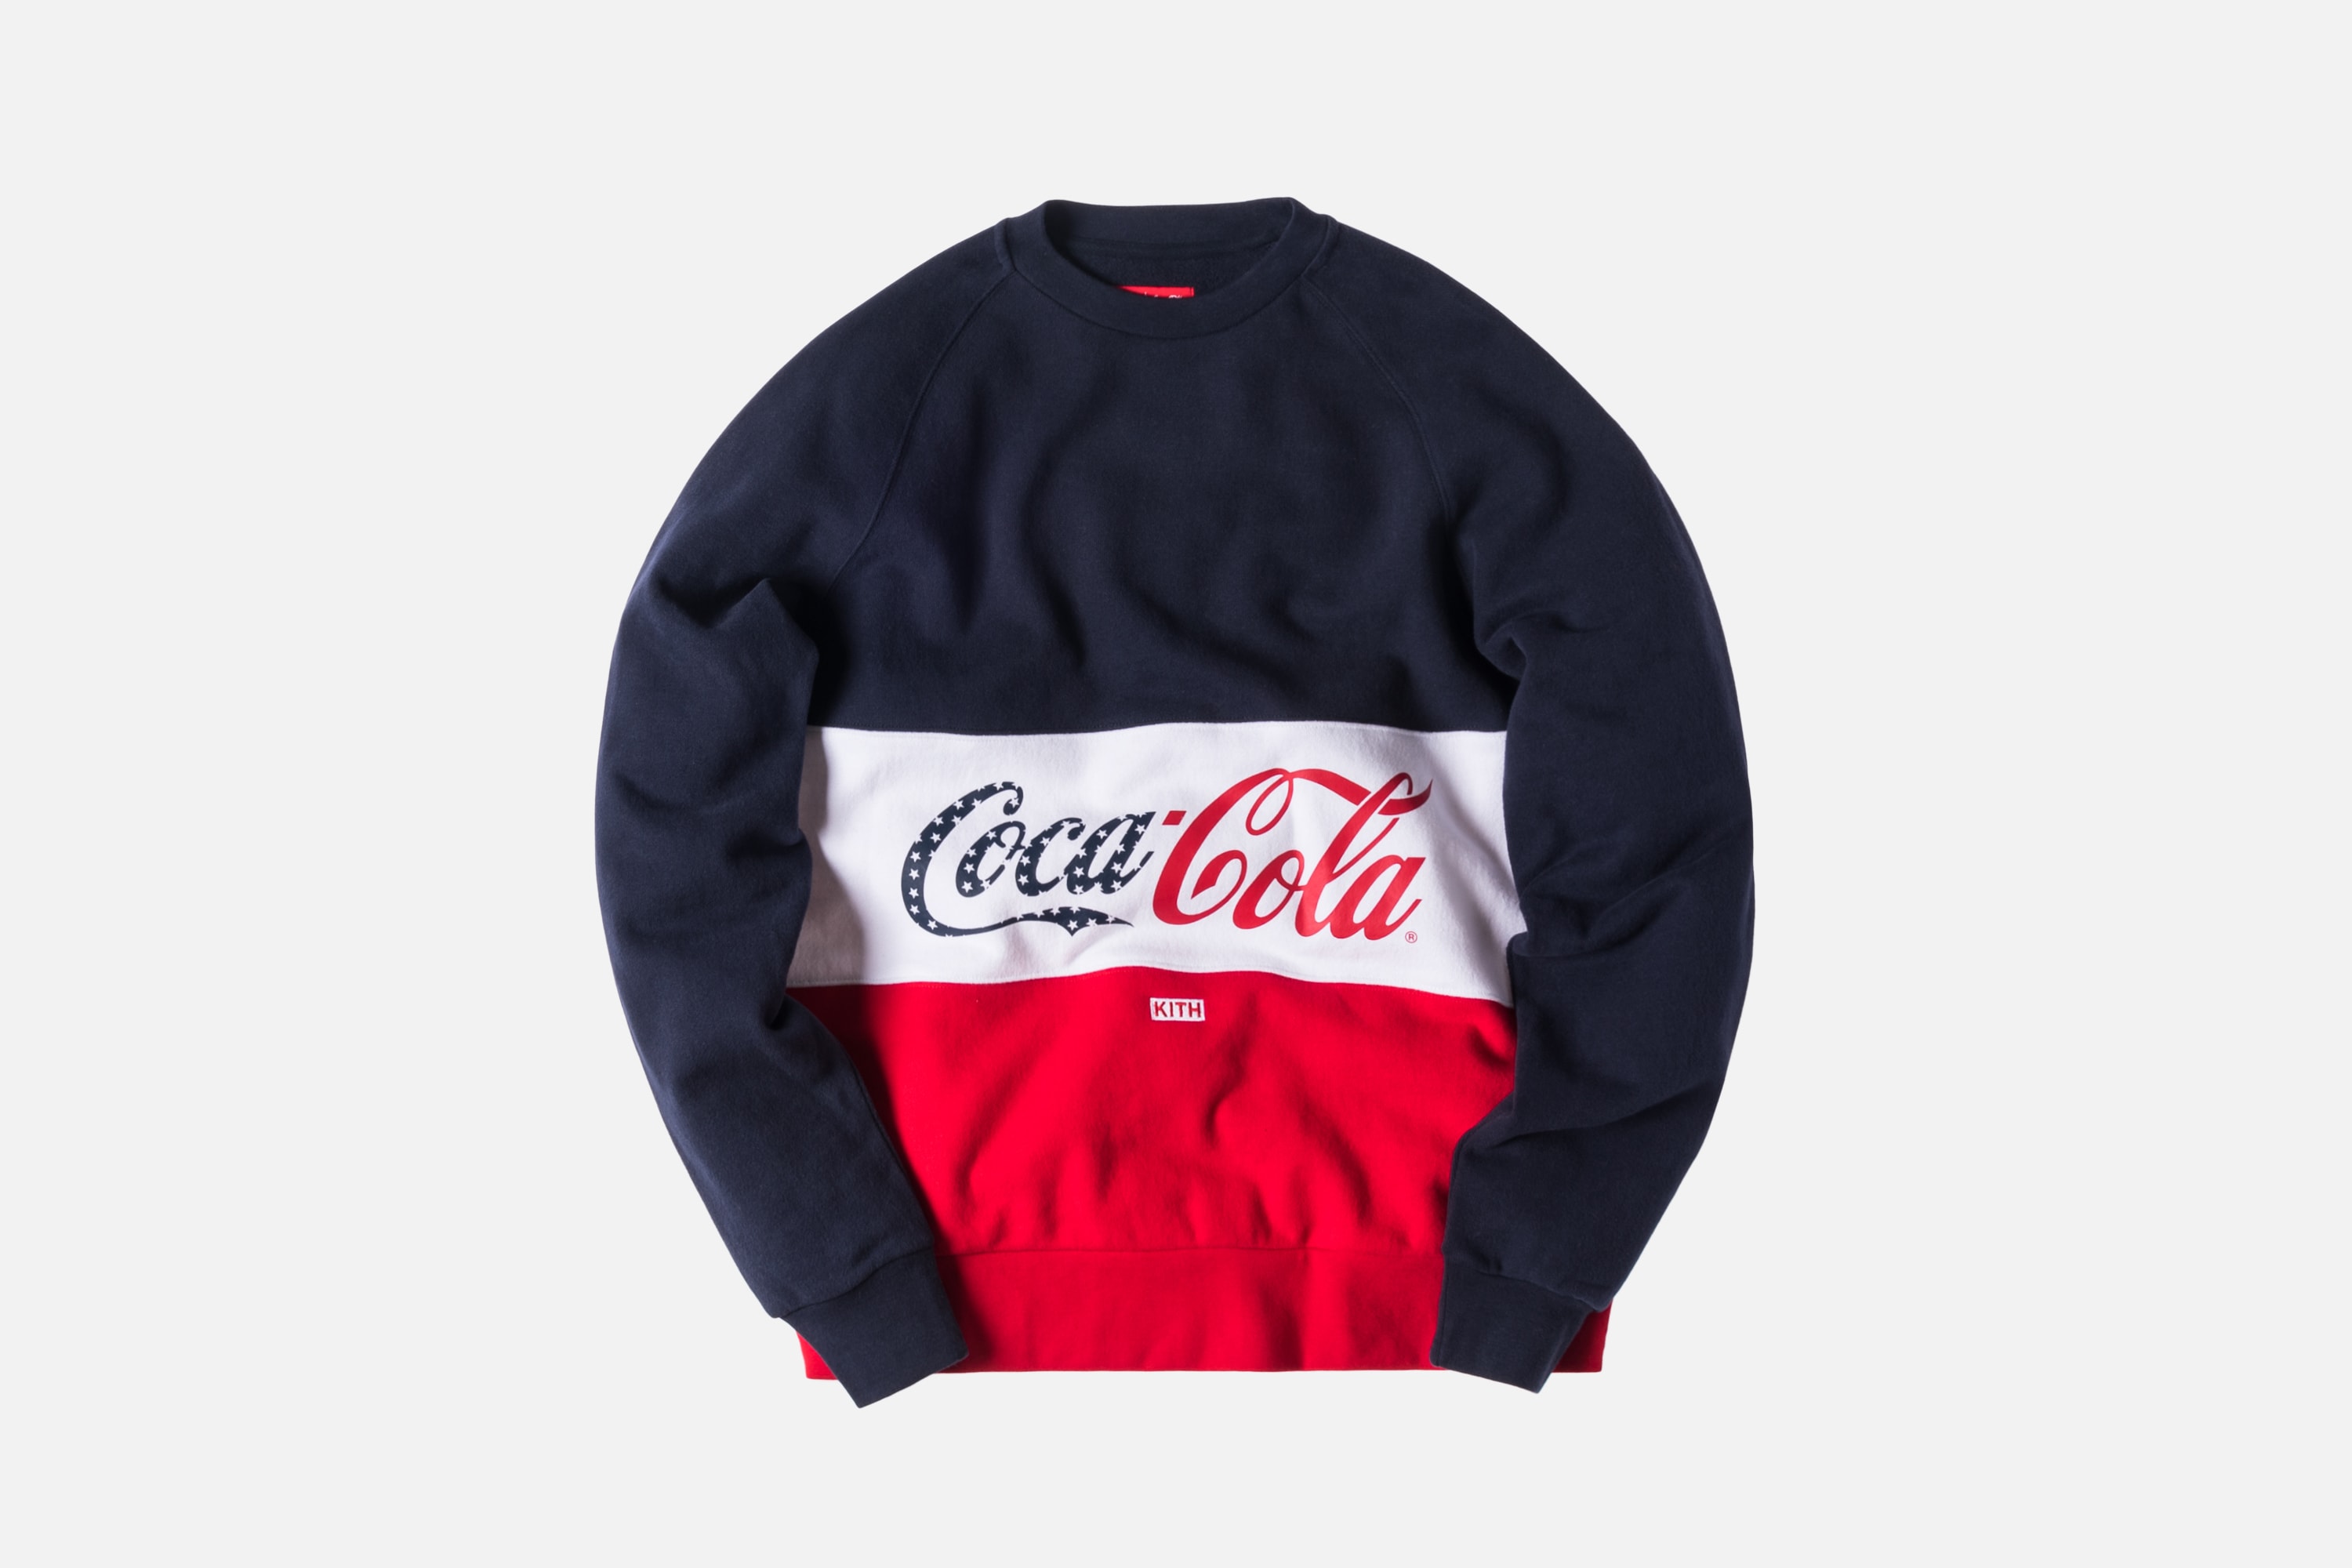 KITH x Coca-Cola 2017 Fall/Winter Collection